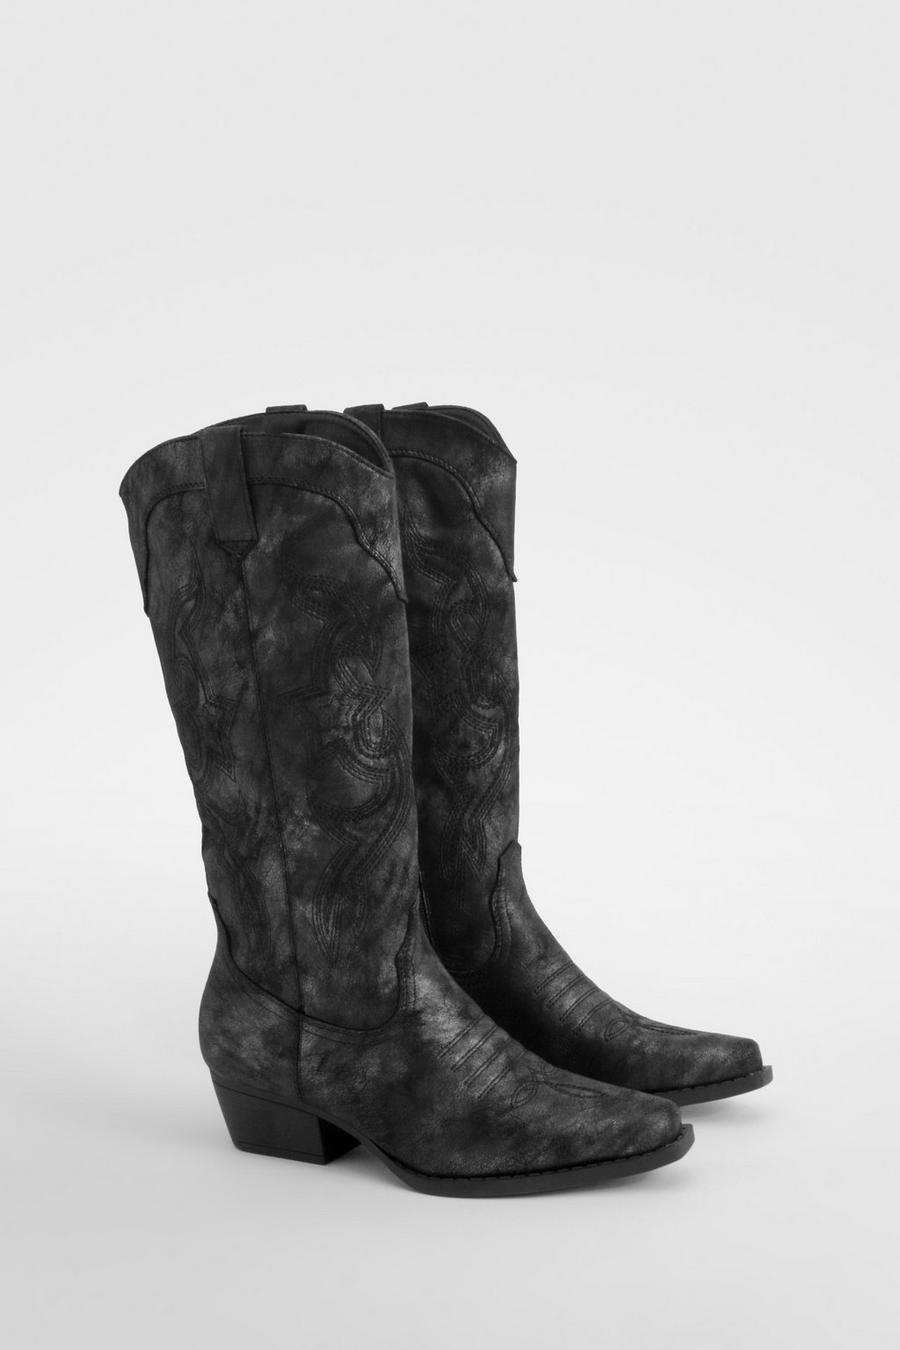 Black Burnished Pu Cowboy Western Boots 